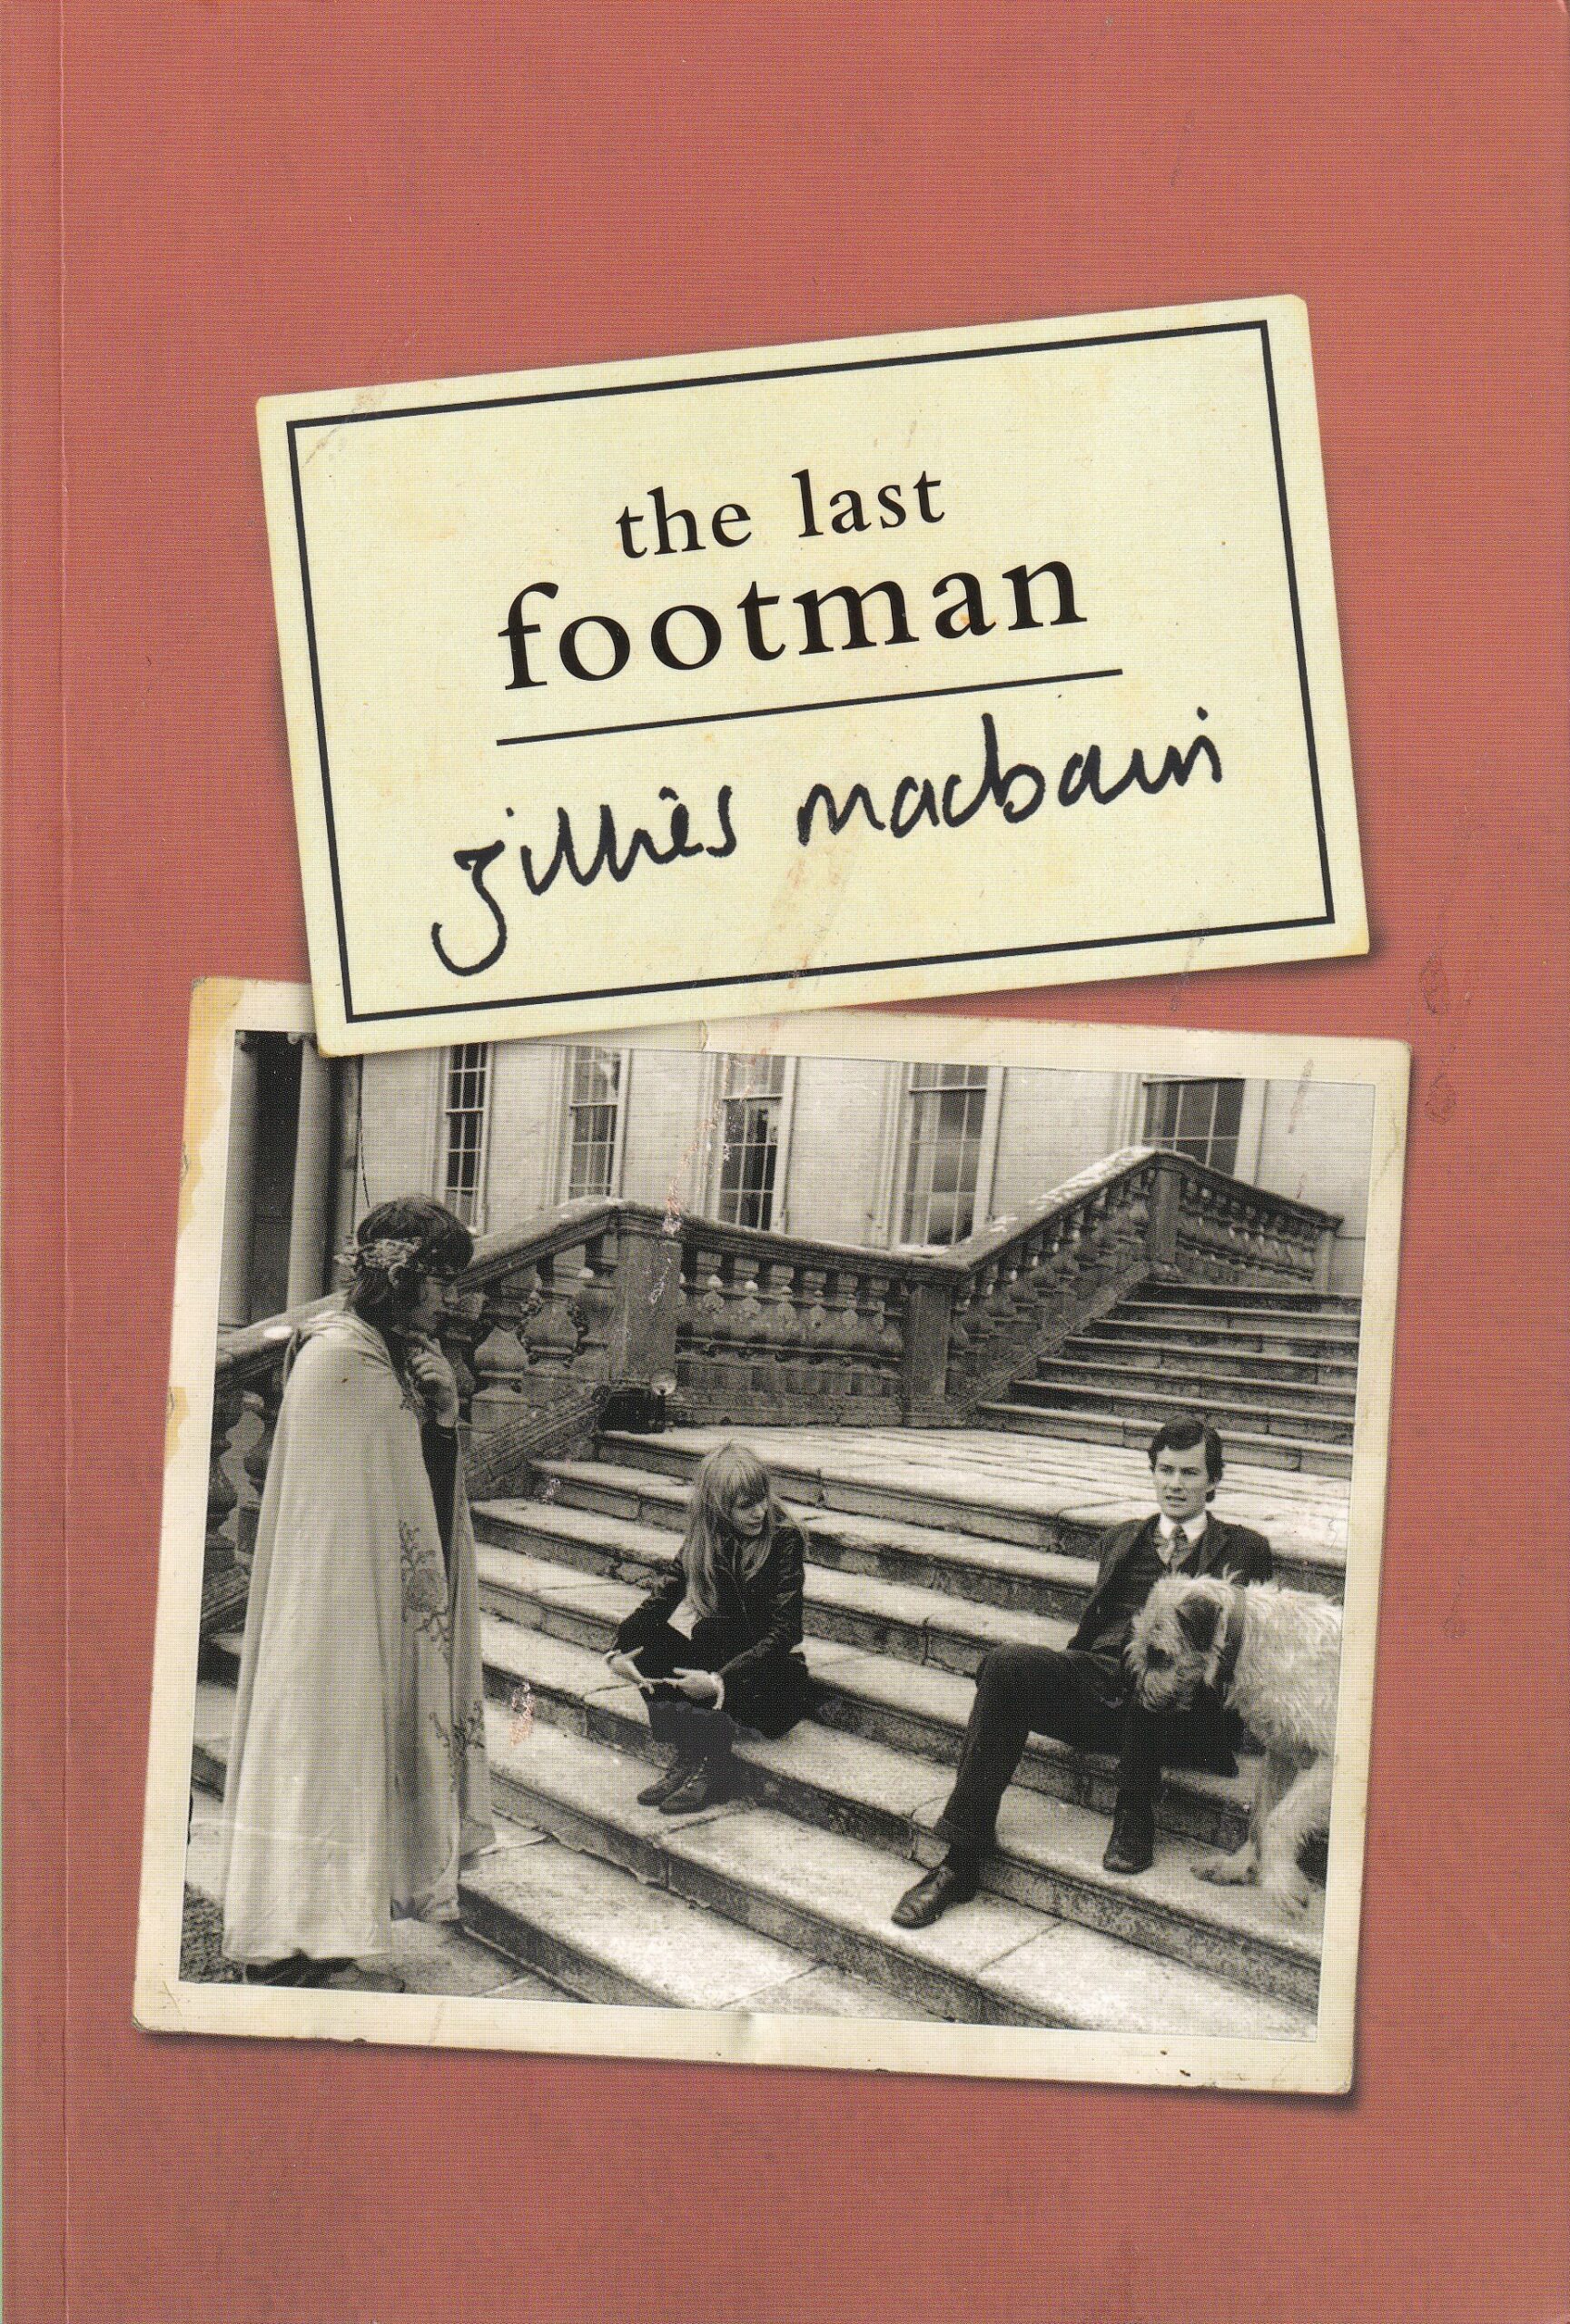 The Last Footman-Signed Copy | Gillies Macbain | Charlie Byrne's